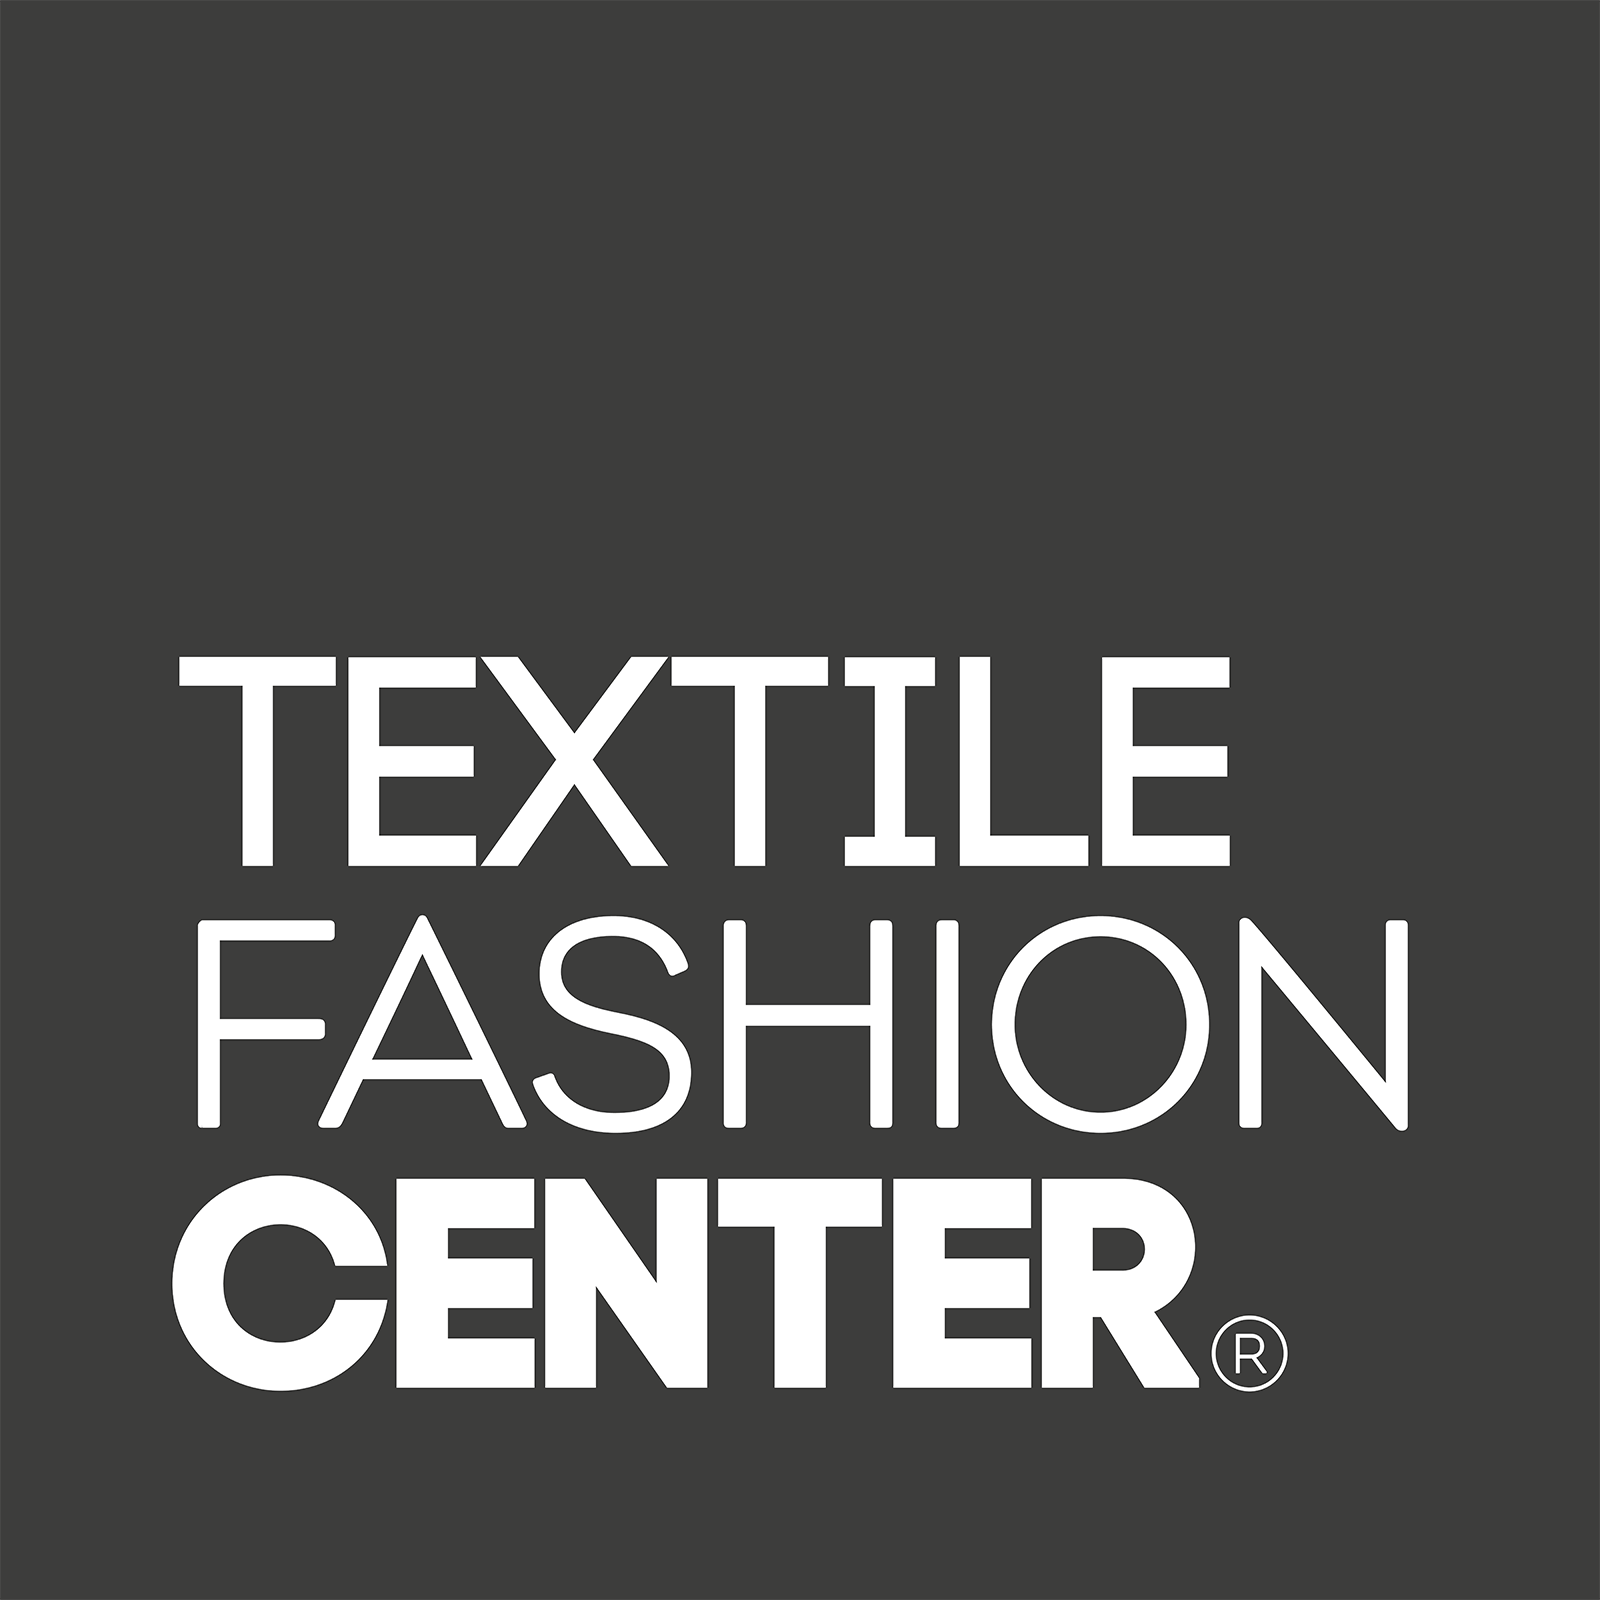 Textile Fashion Center